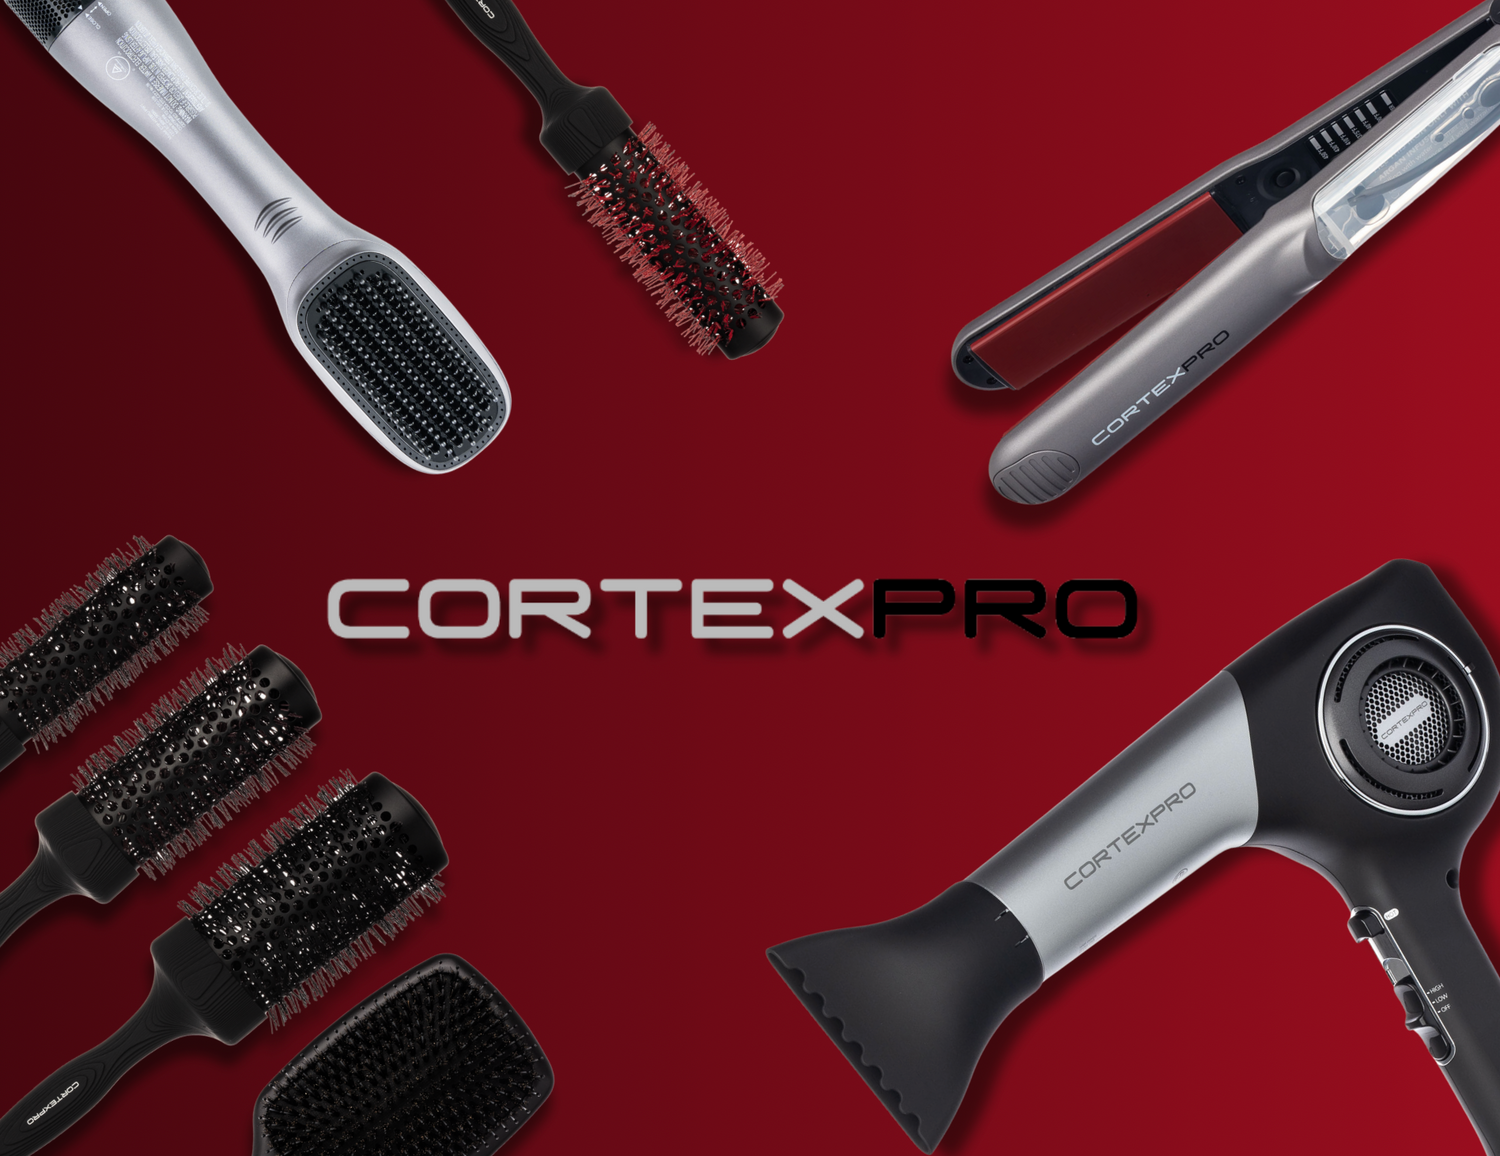 Cortex Pro